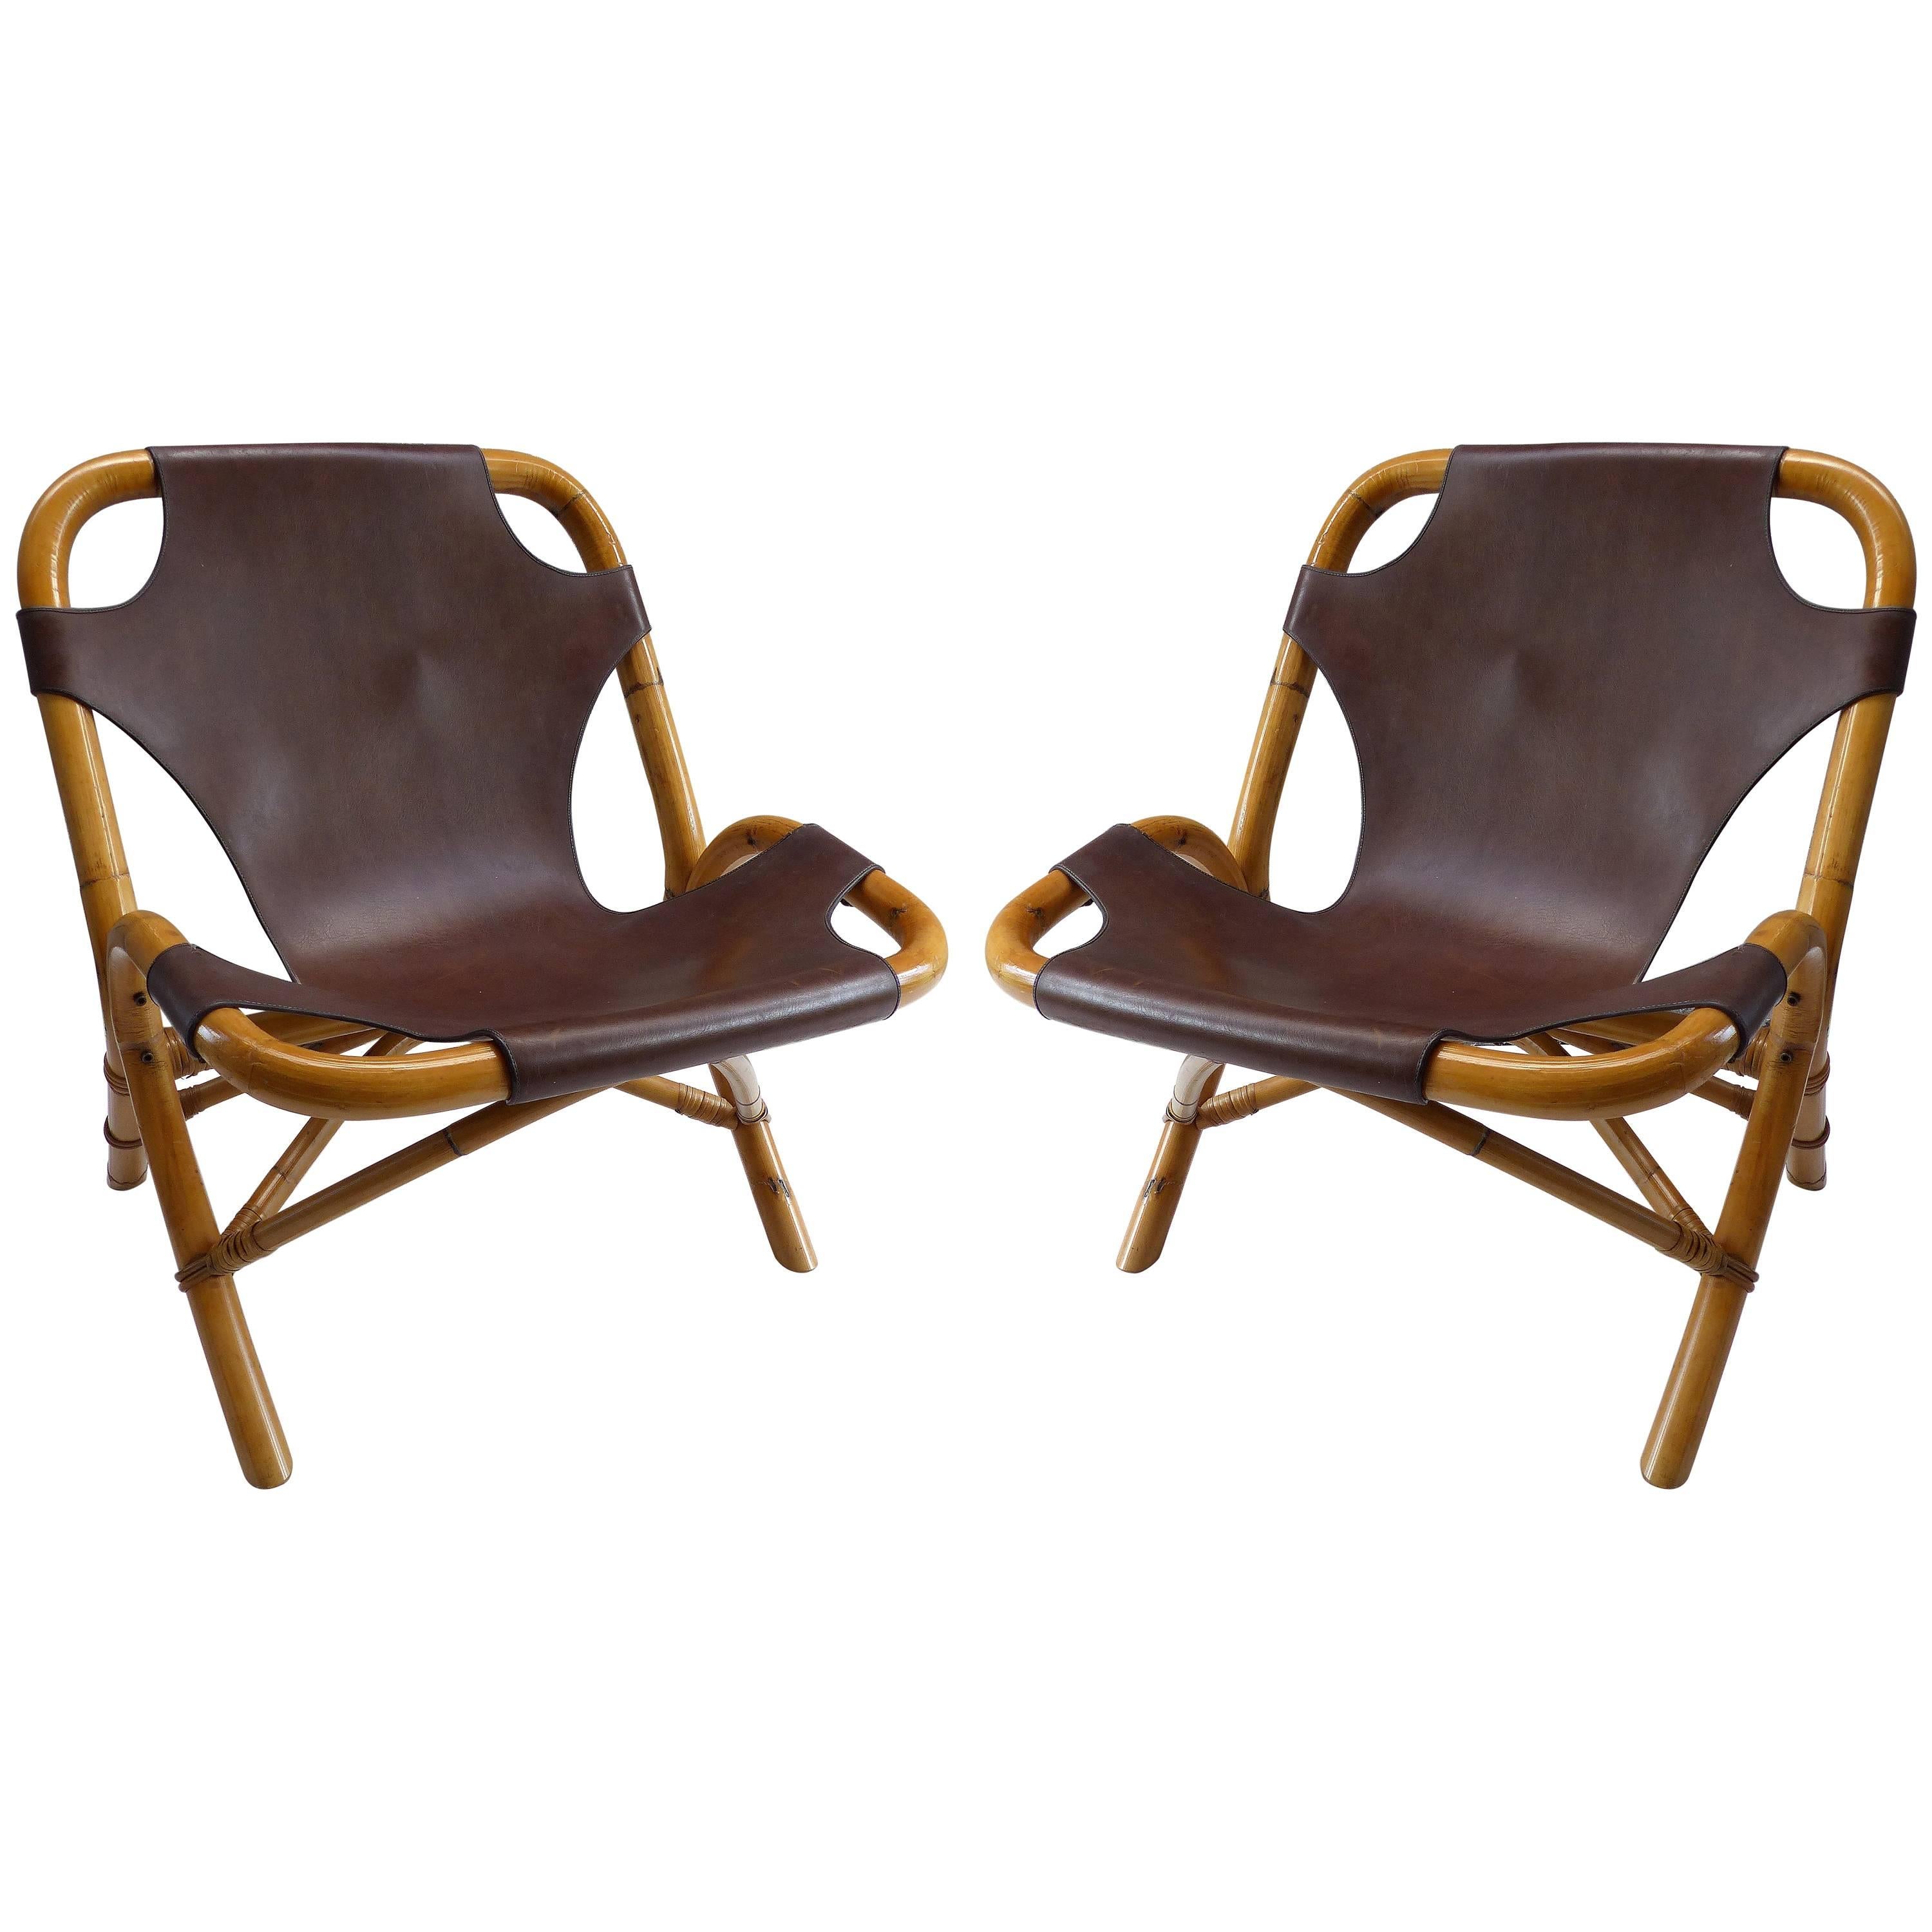 Pair of 1950s Italian Rattan and Leather Chairs by Pierantonio Bonacina